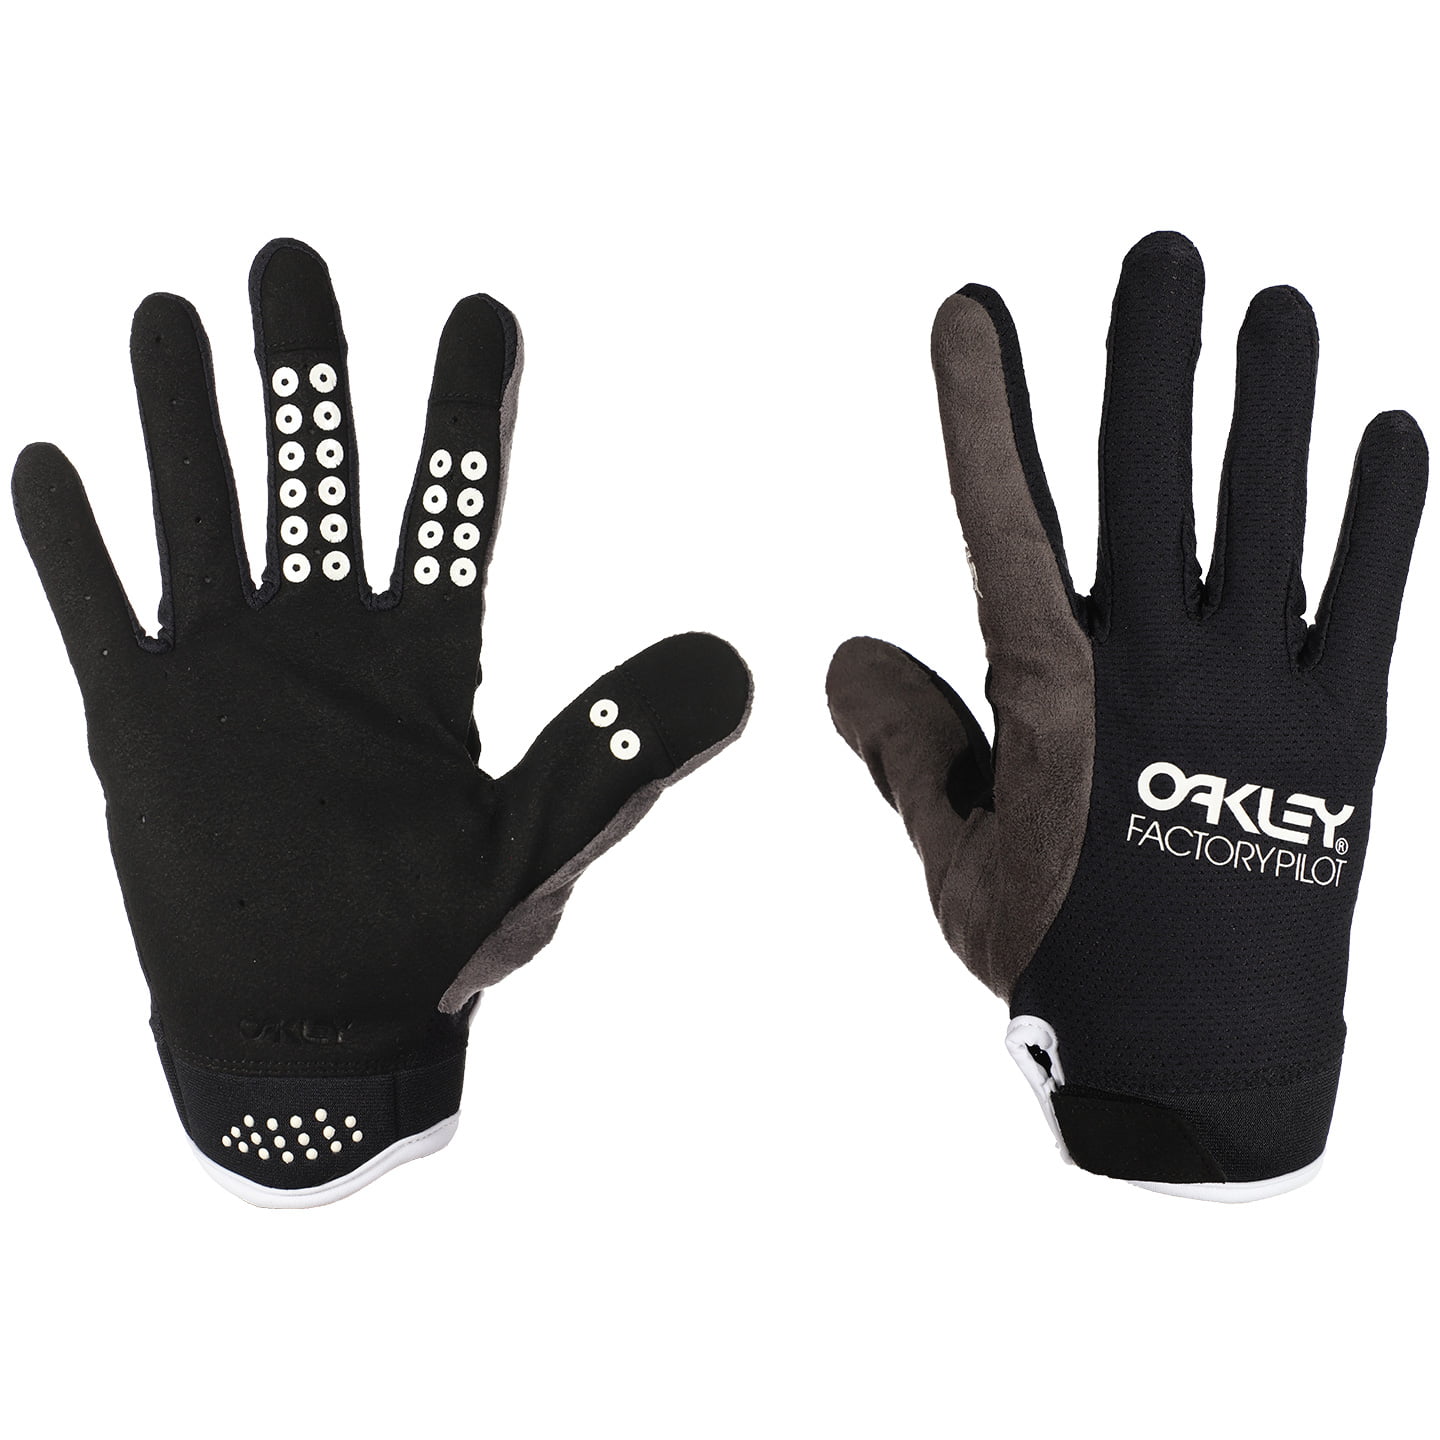 OAKLEY All Mountain Full Finger Gloves Cycling Gloves, for men, size M, Cycling gloves, Cycling gear